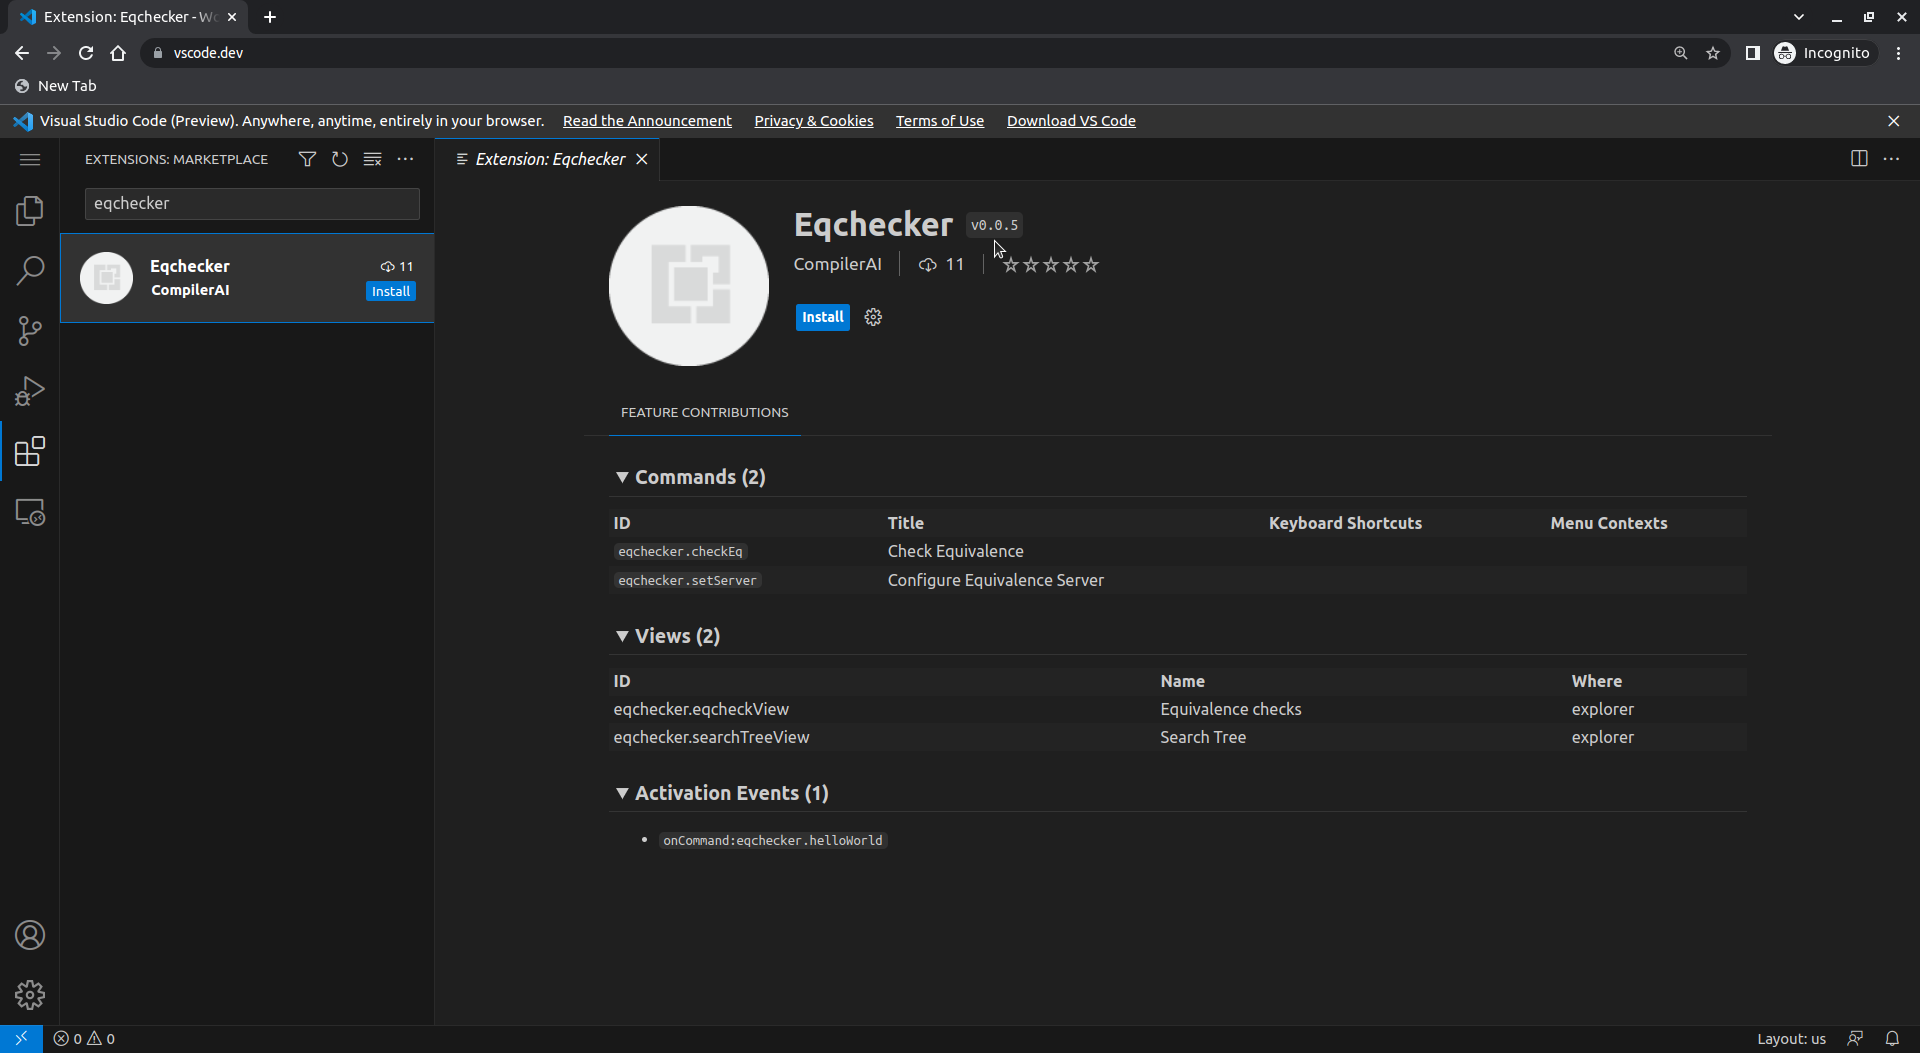 Check the Eqchecker extension version